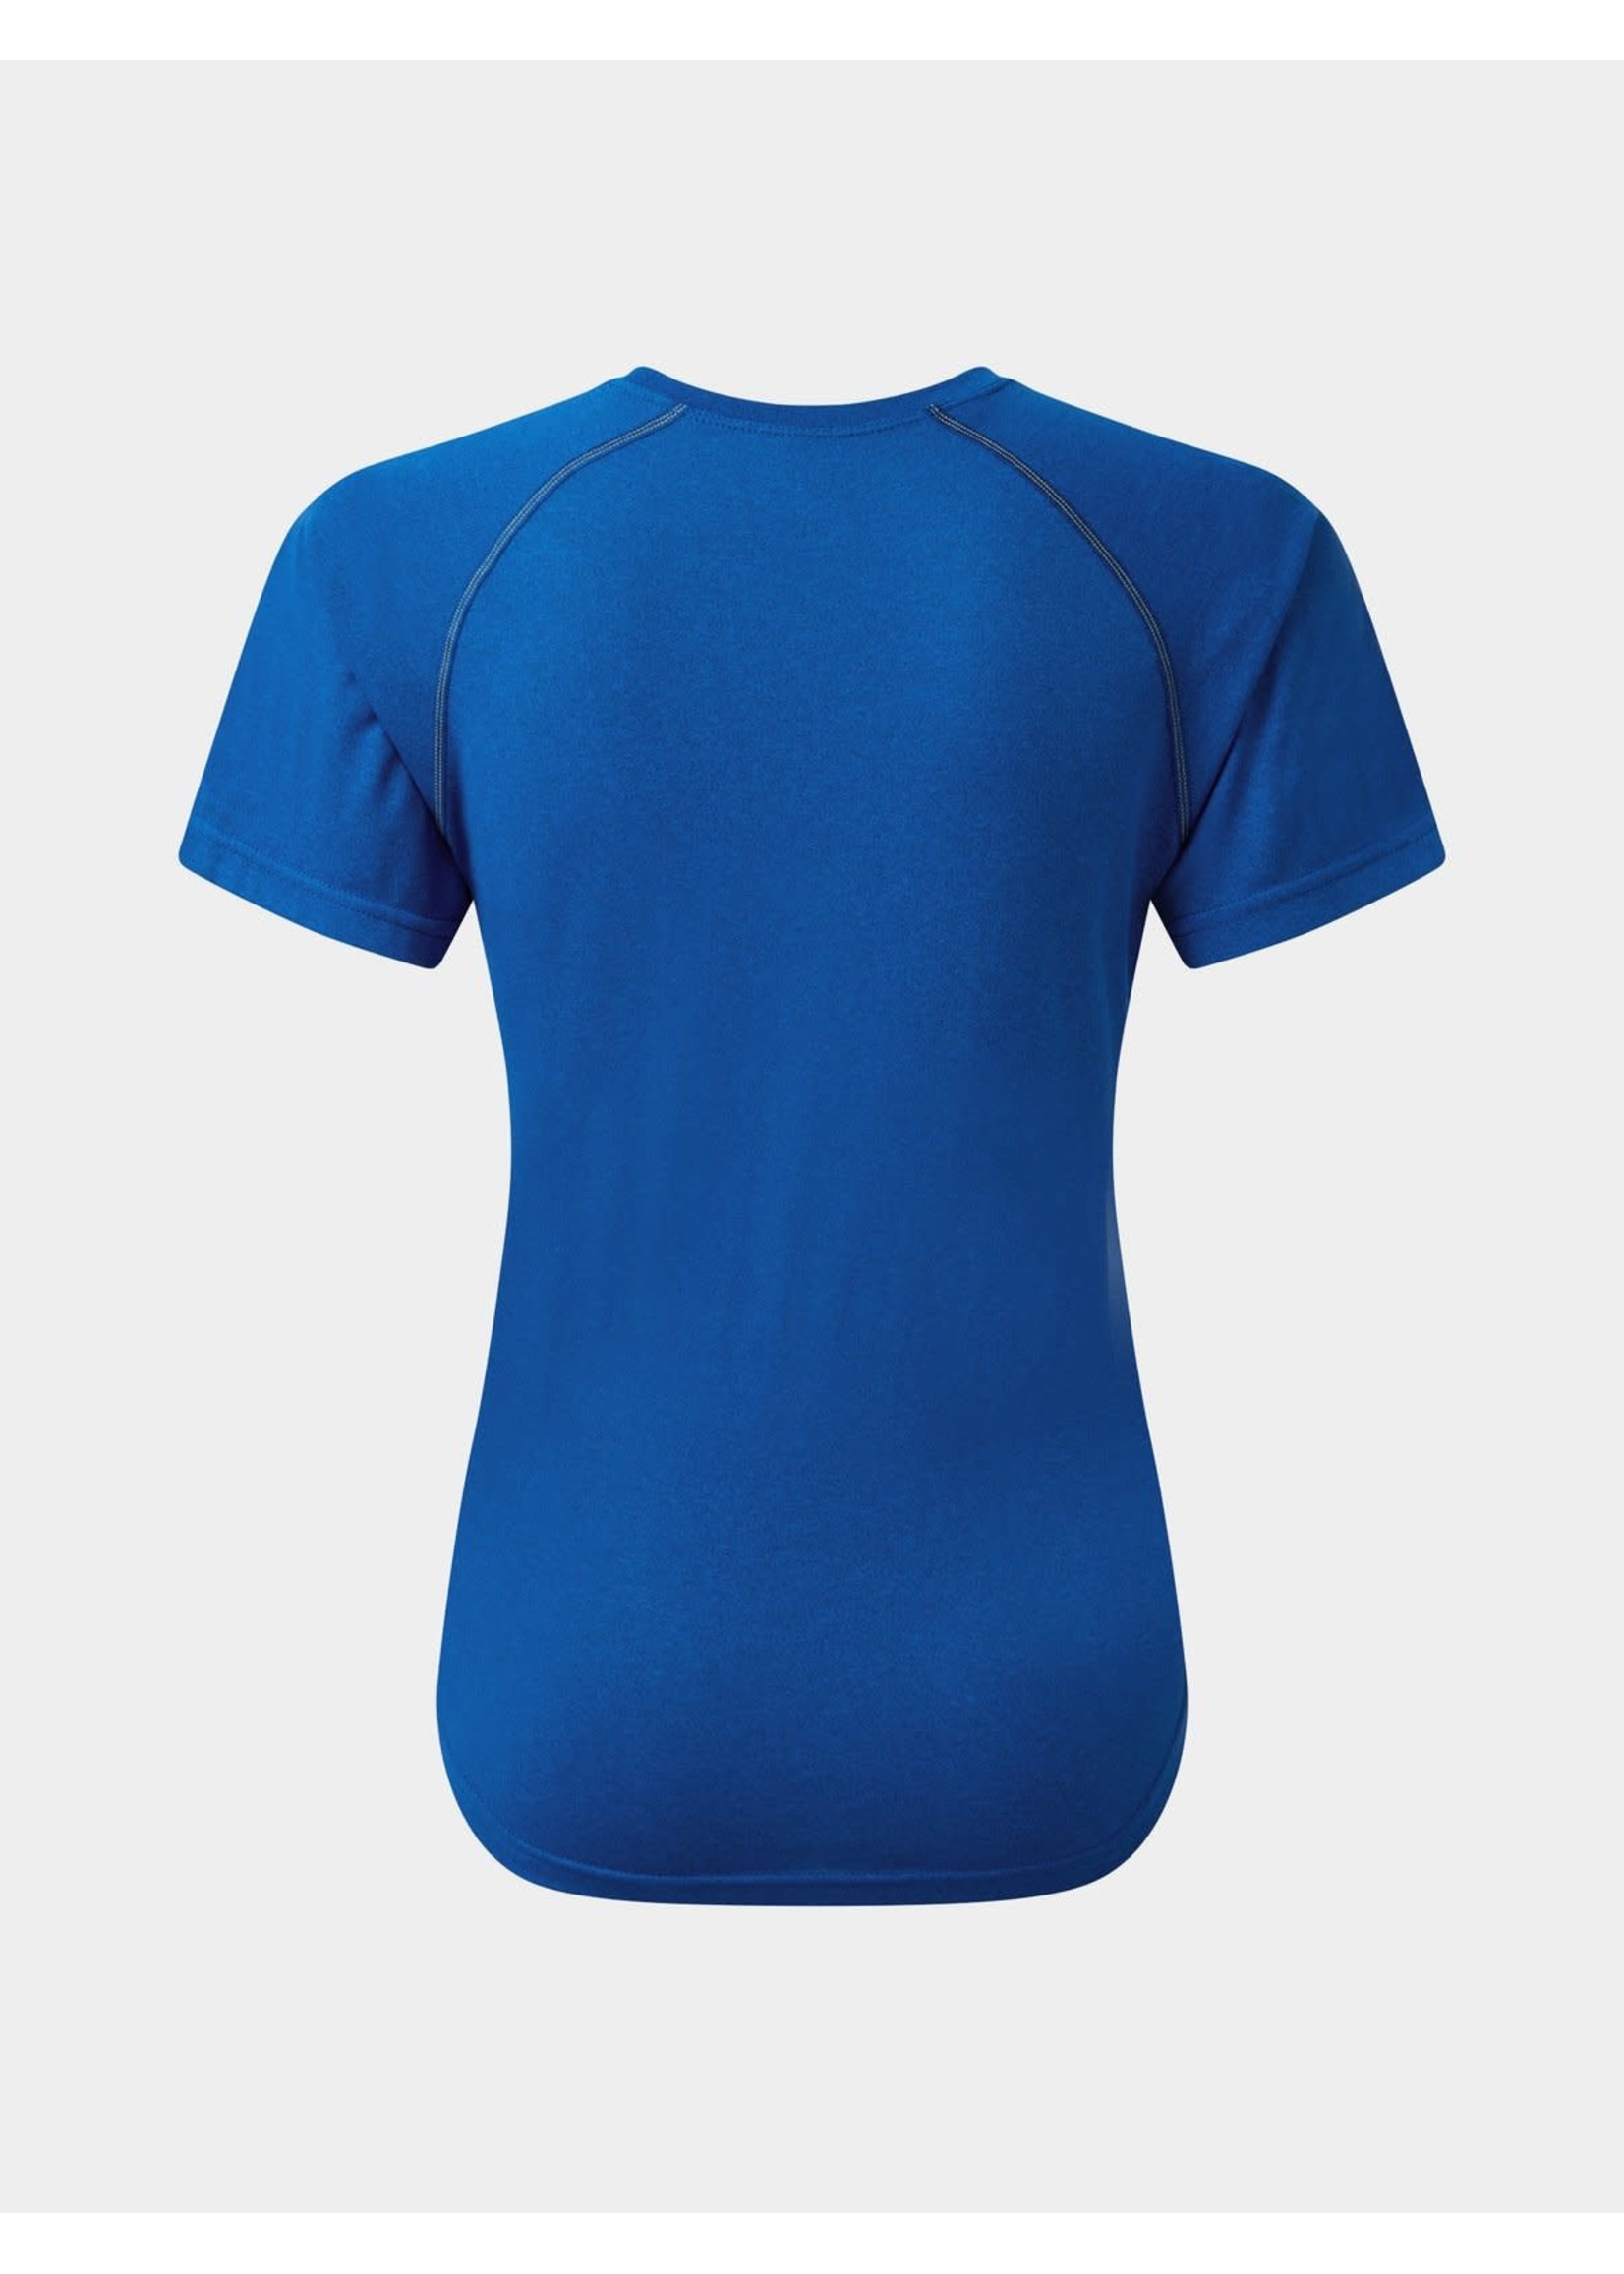 Ronhill Ron Hill Core Ladies T Shirt (2021) - Azurite Marl